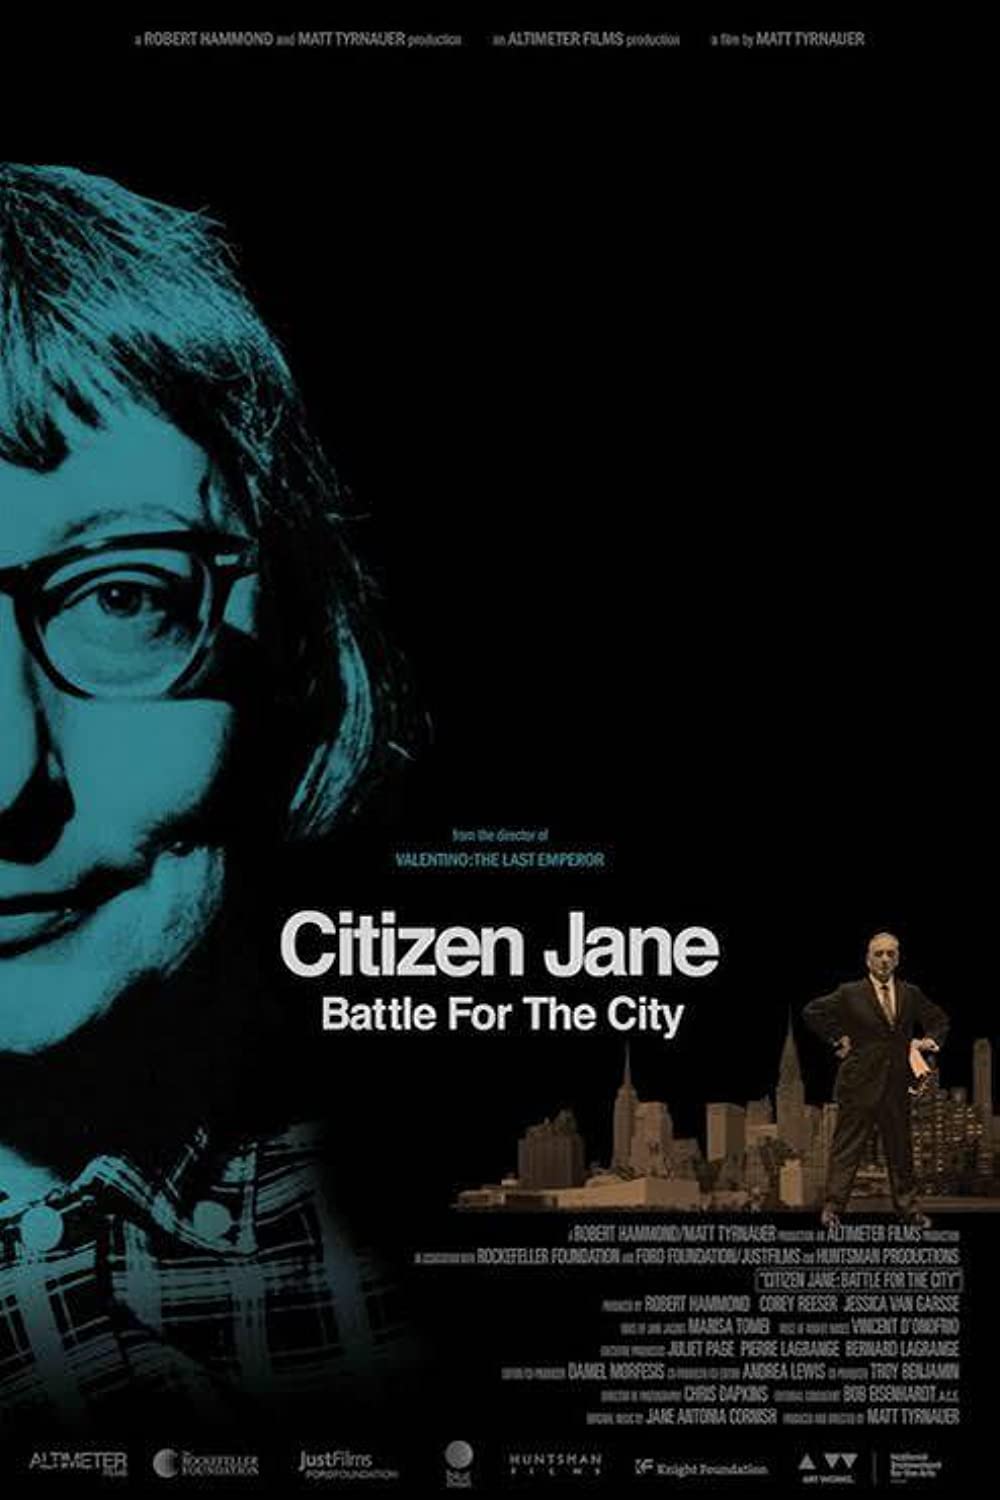 Filmbeschreibung zu Citizen Jane: Battle for the City